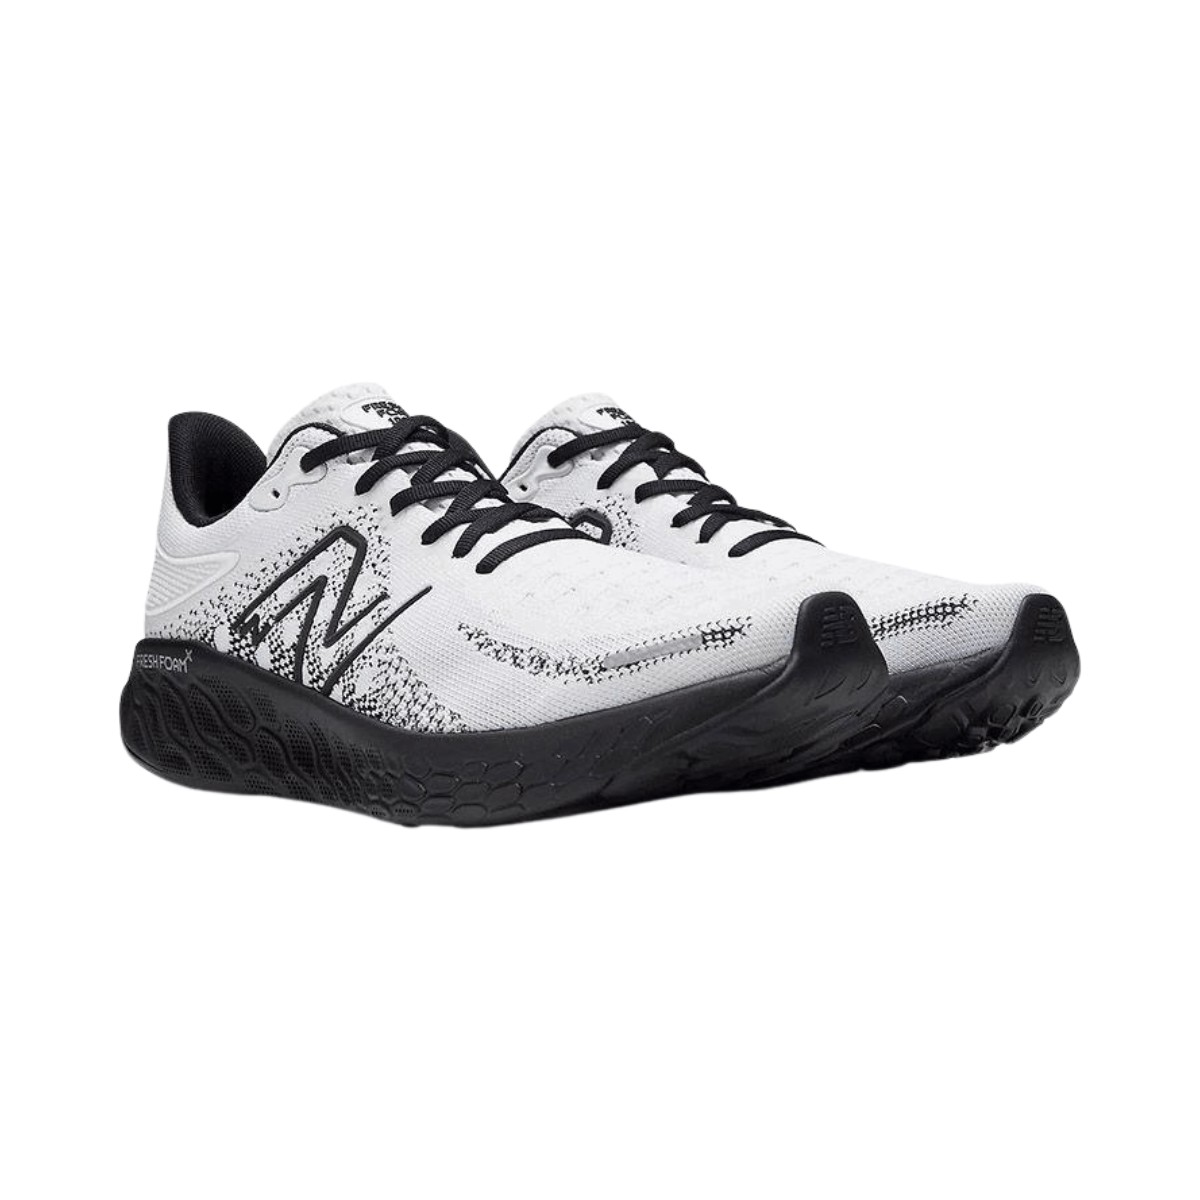 Comprar Zapatillas Balance Fresh Foam X Blanco Negro AW22 al Mejor